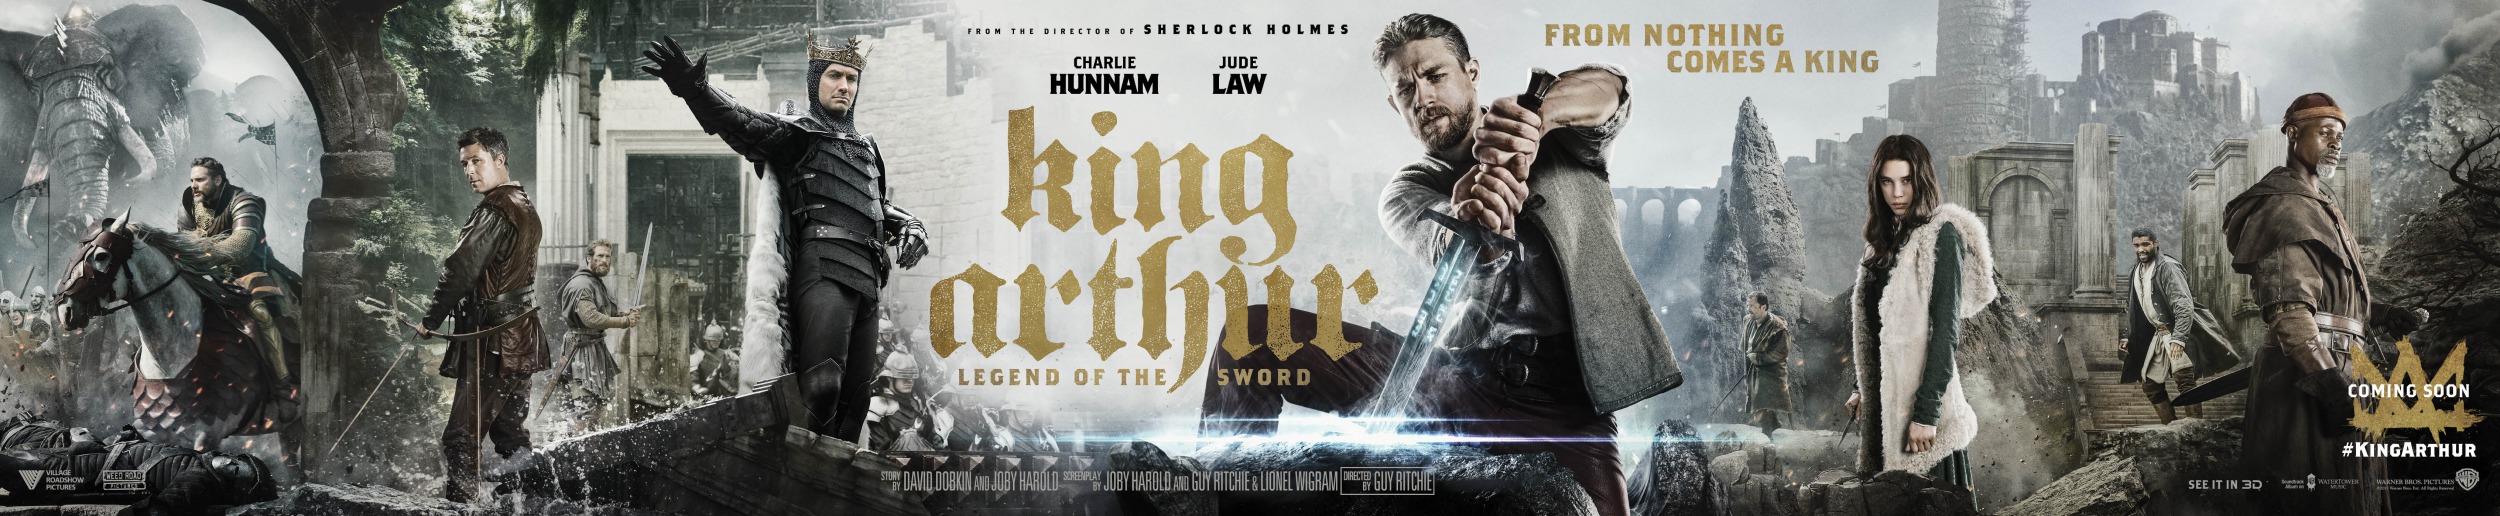 Mega Sized Movie Poster Image for King Arthur: Legend of the Sword (#8 of 22)